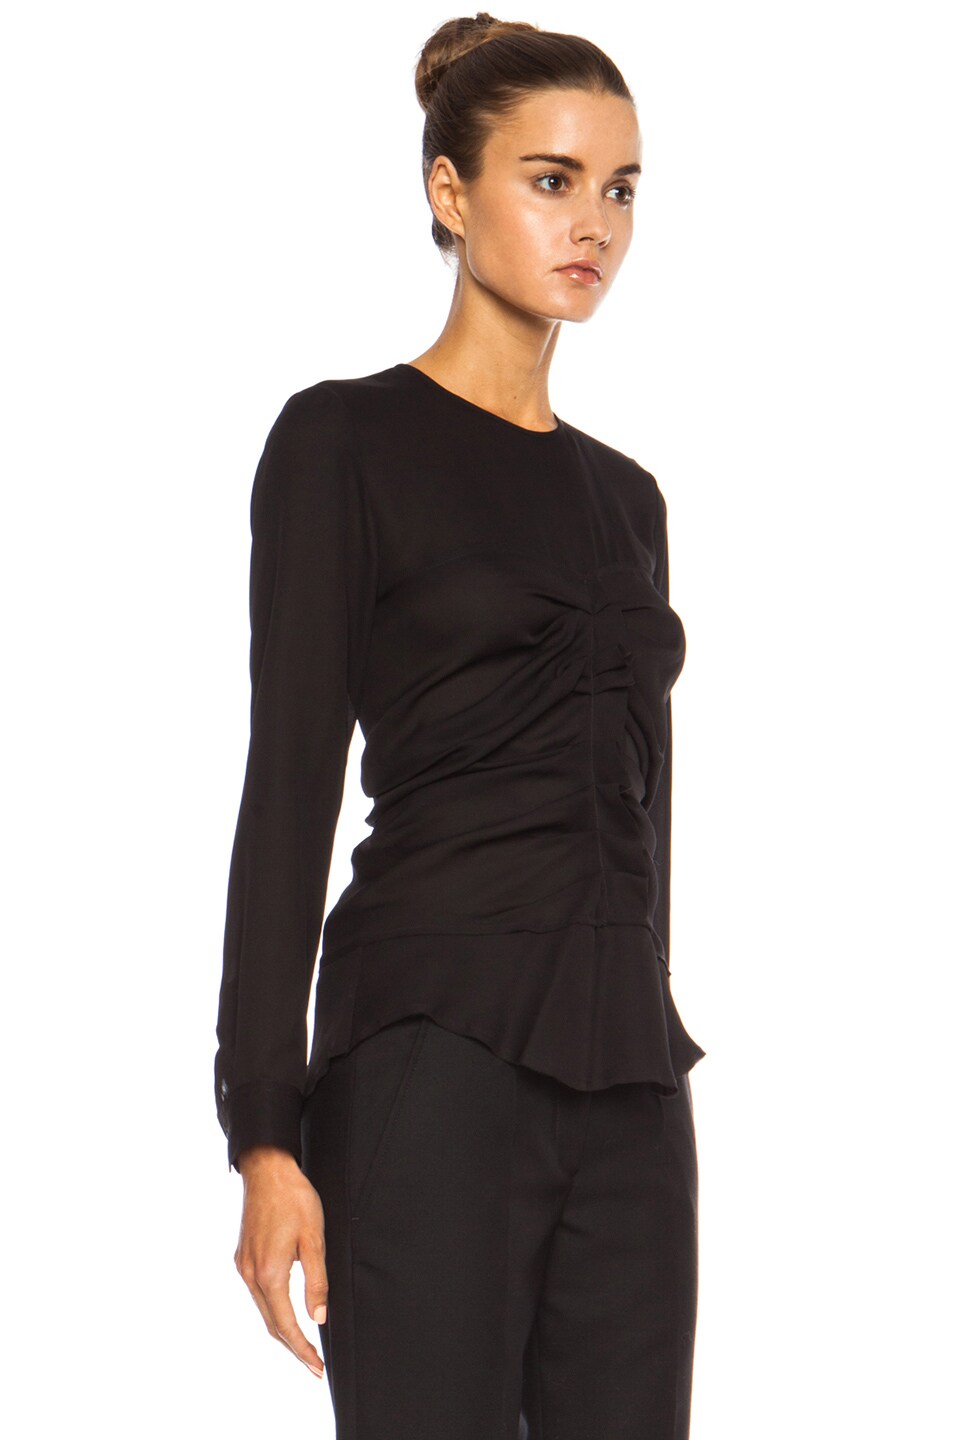 Isabel Marant Heather Ruched Silk Georgette Top in Black | FWRD